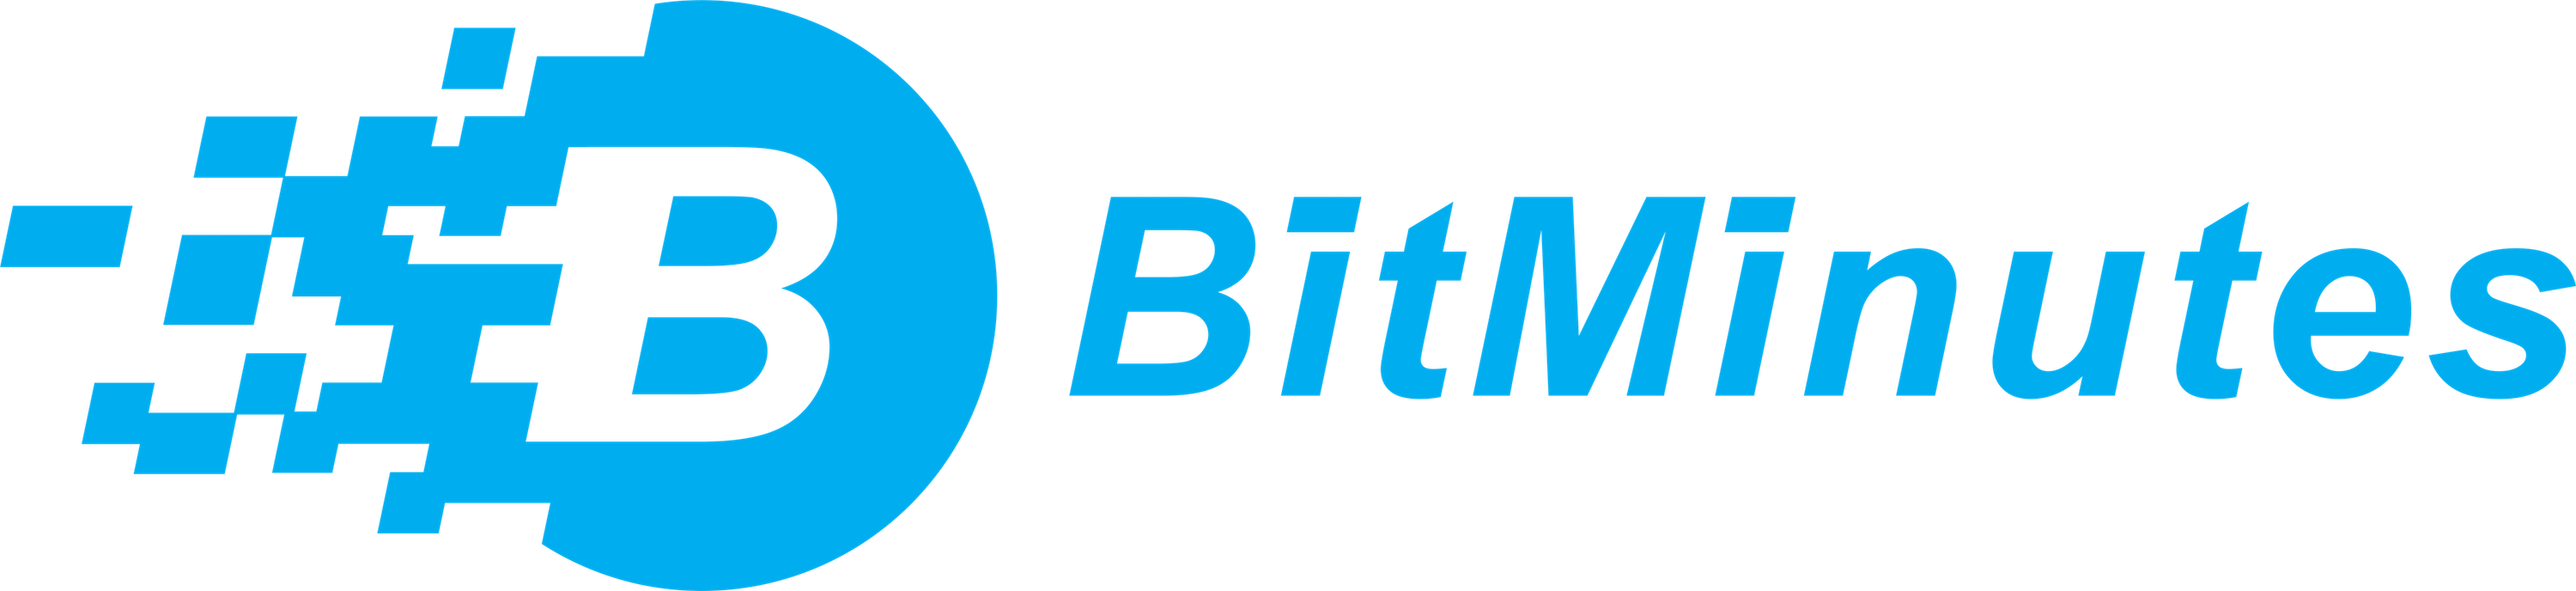 BitMinutes Logo